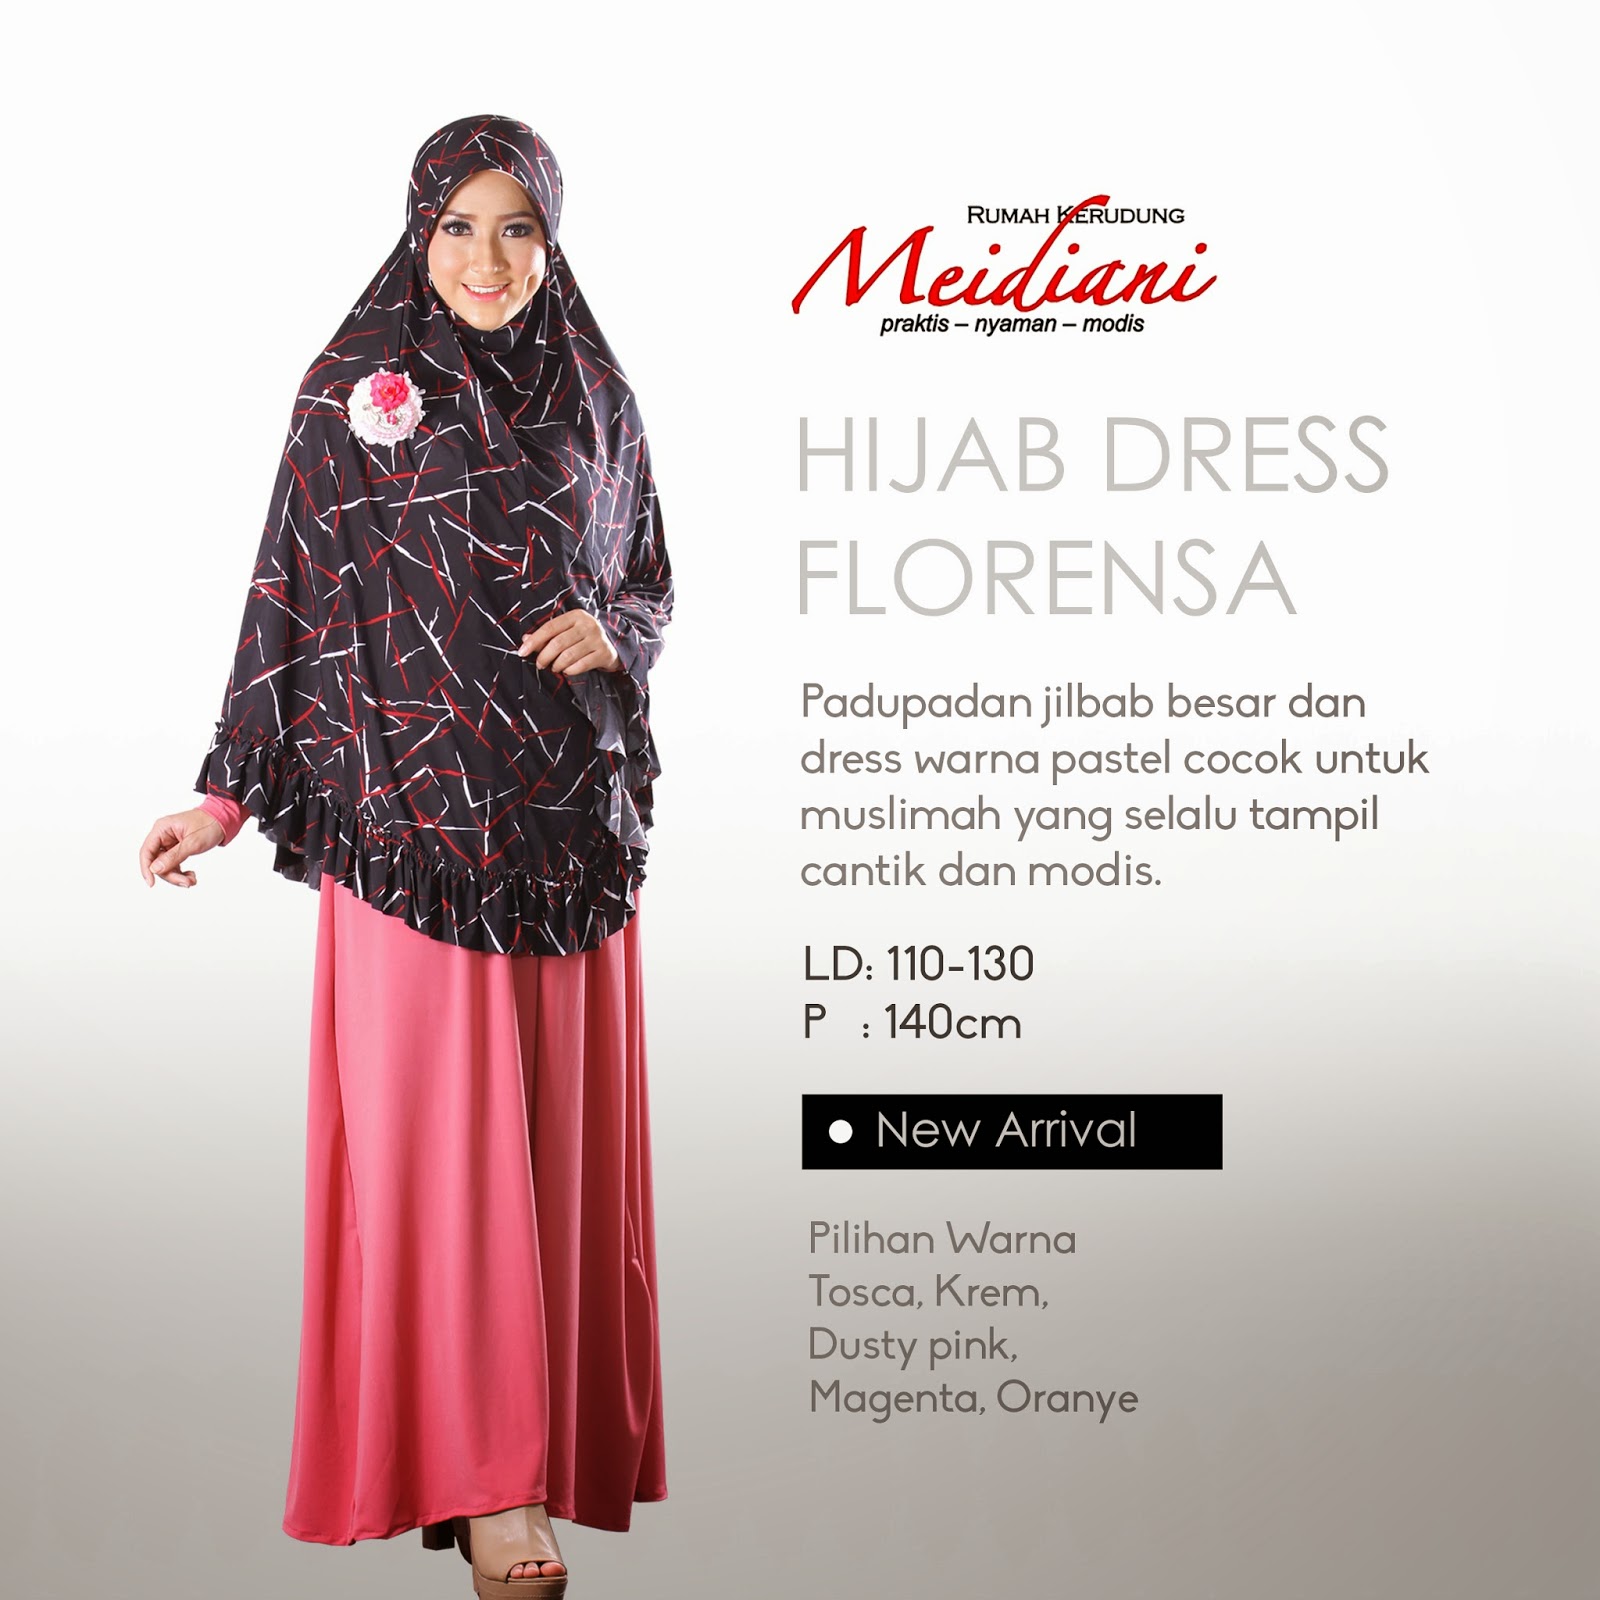 Hijab Dress Florensa